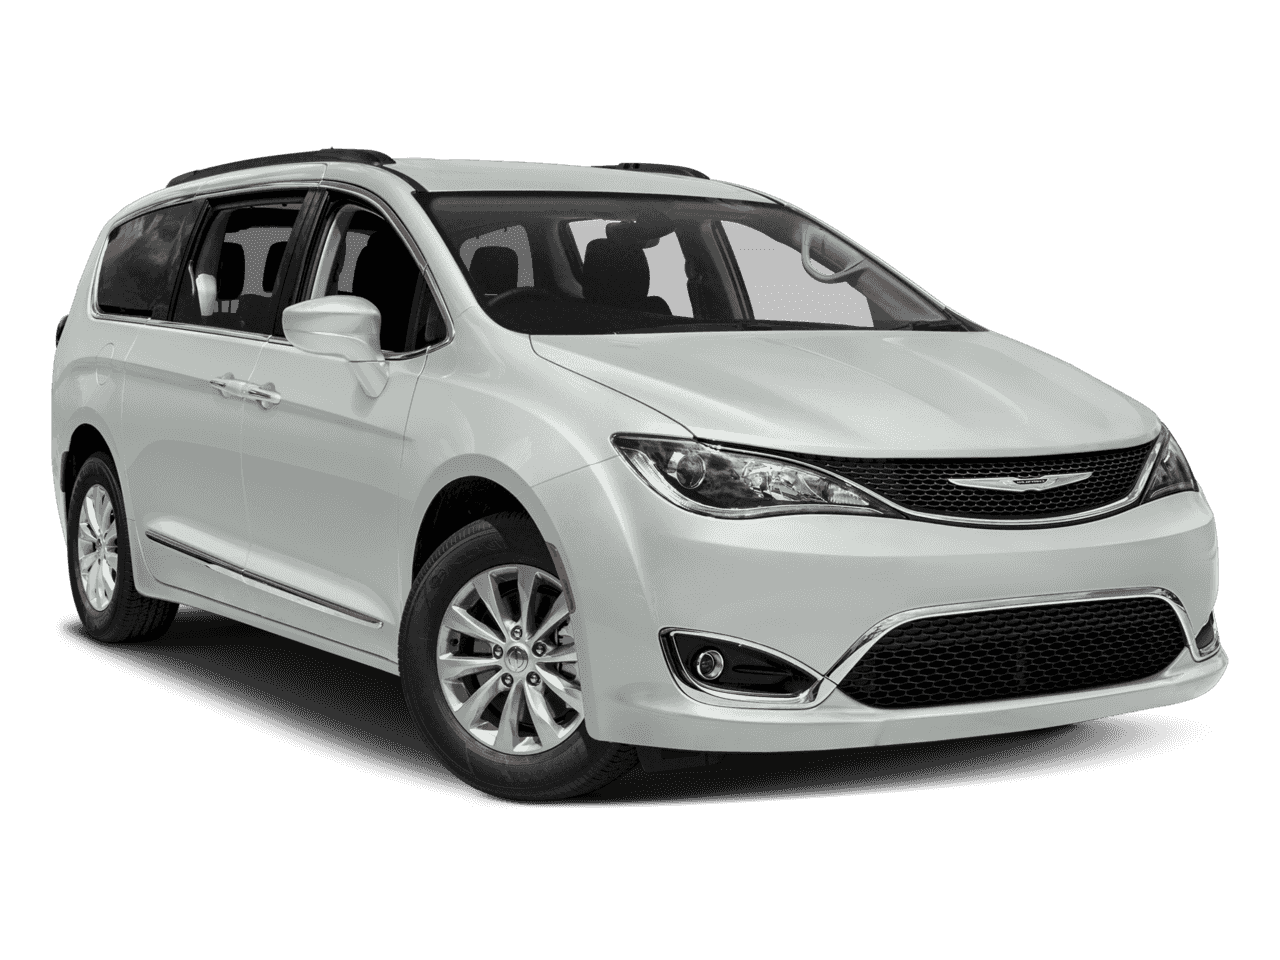 Chrysler PNG Image